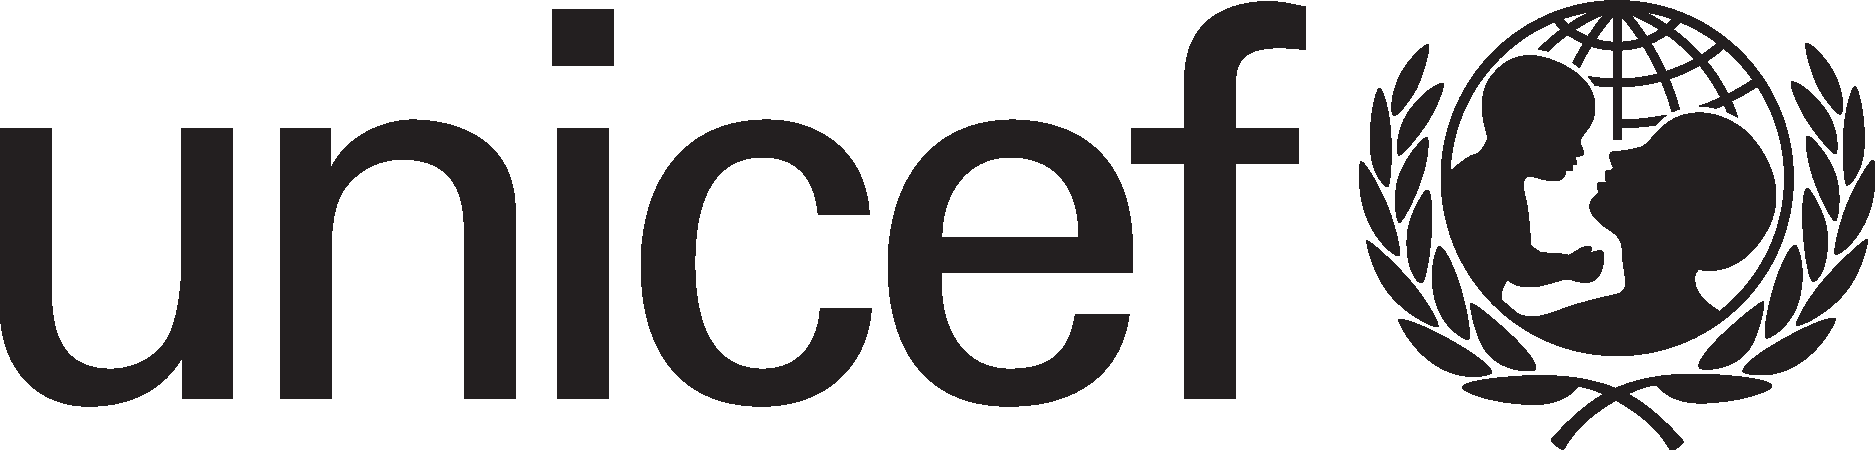 UNICEF black Logo Vector